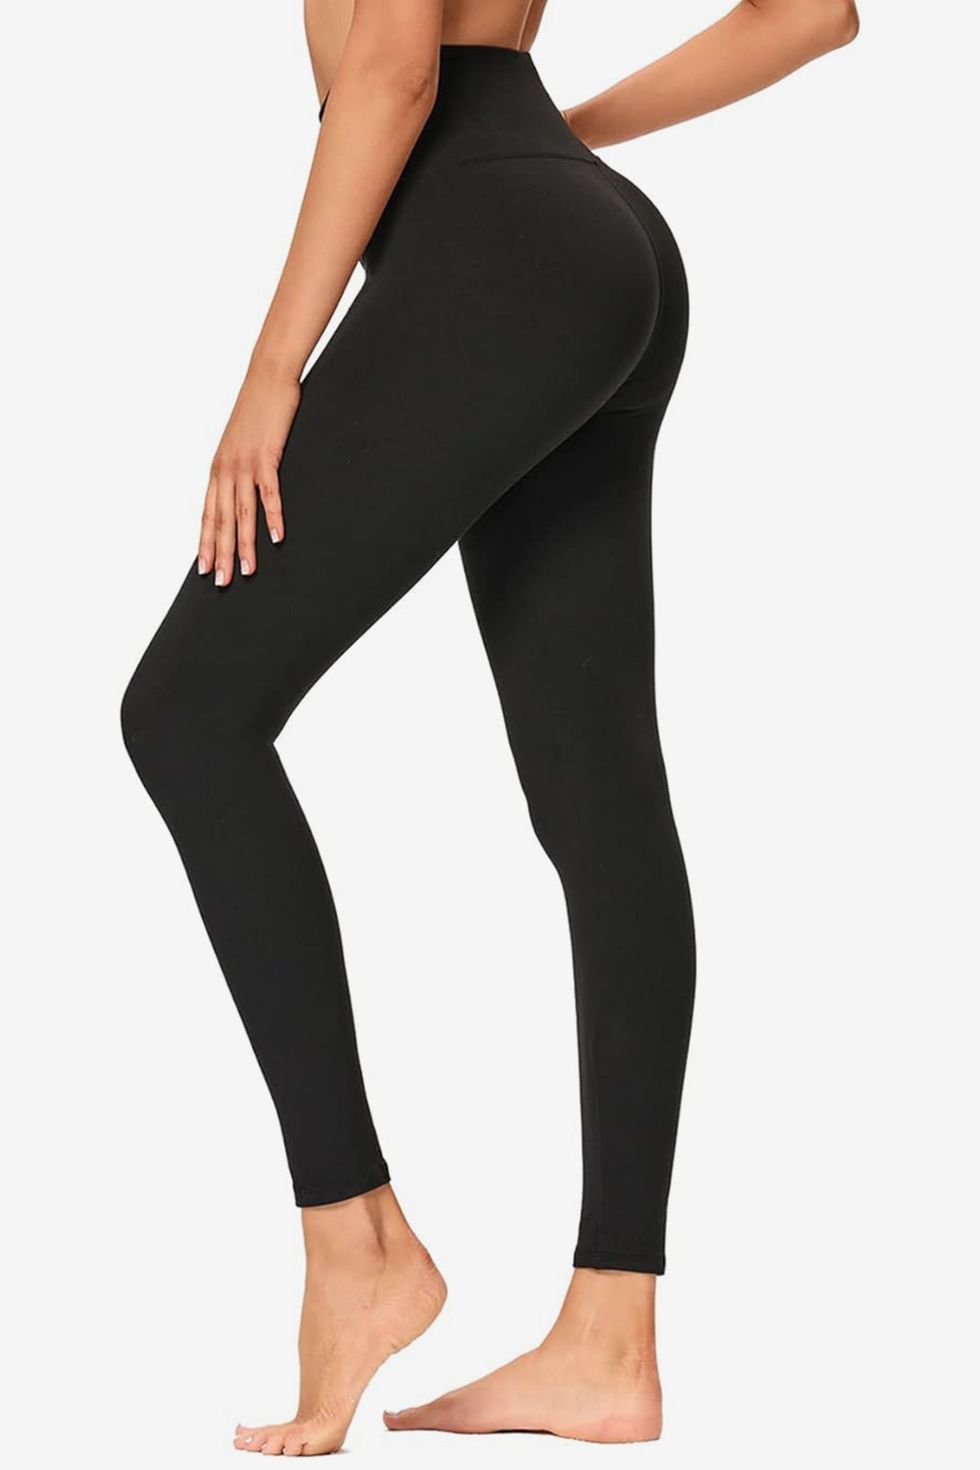 yoga-lic-ious leggings  Yogalicious High Waisted Leggings for Women -  Buttery Soft Second Skin Yoga Pants